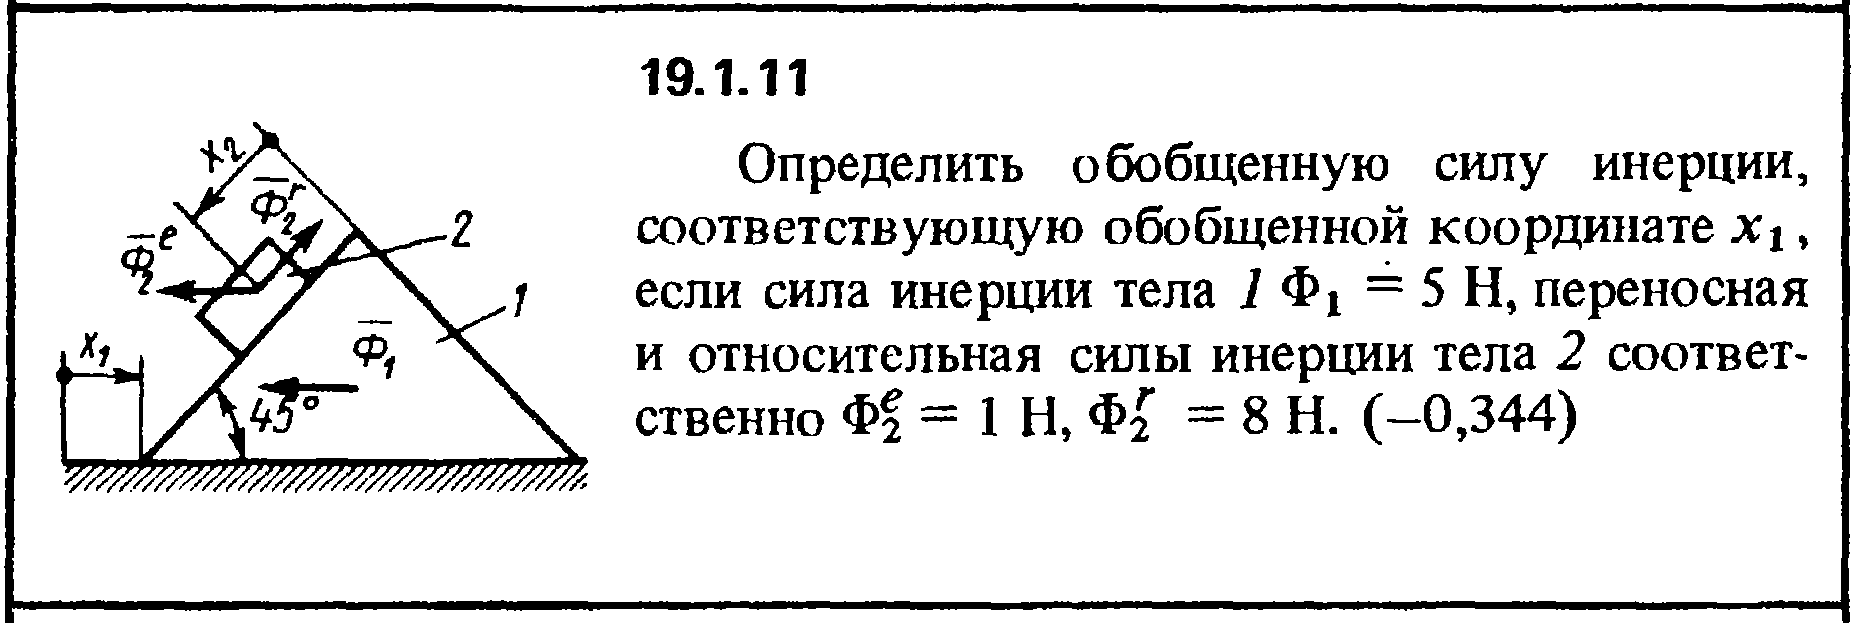 Решение 19.1.11 из сборника (решебника) Кепе О.Е. 1989